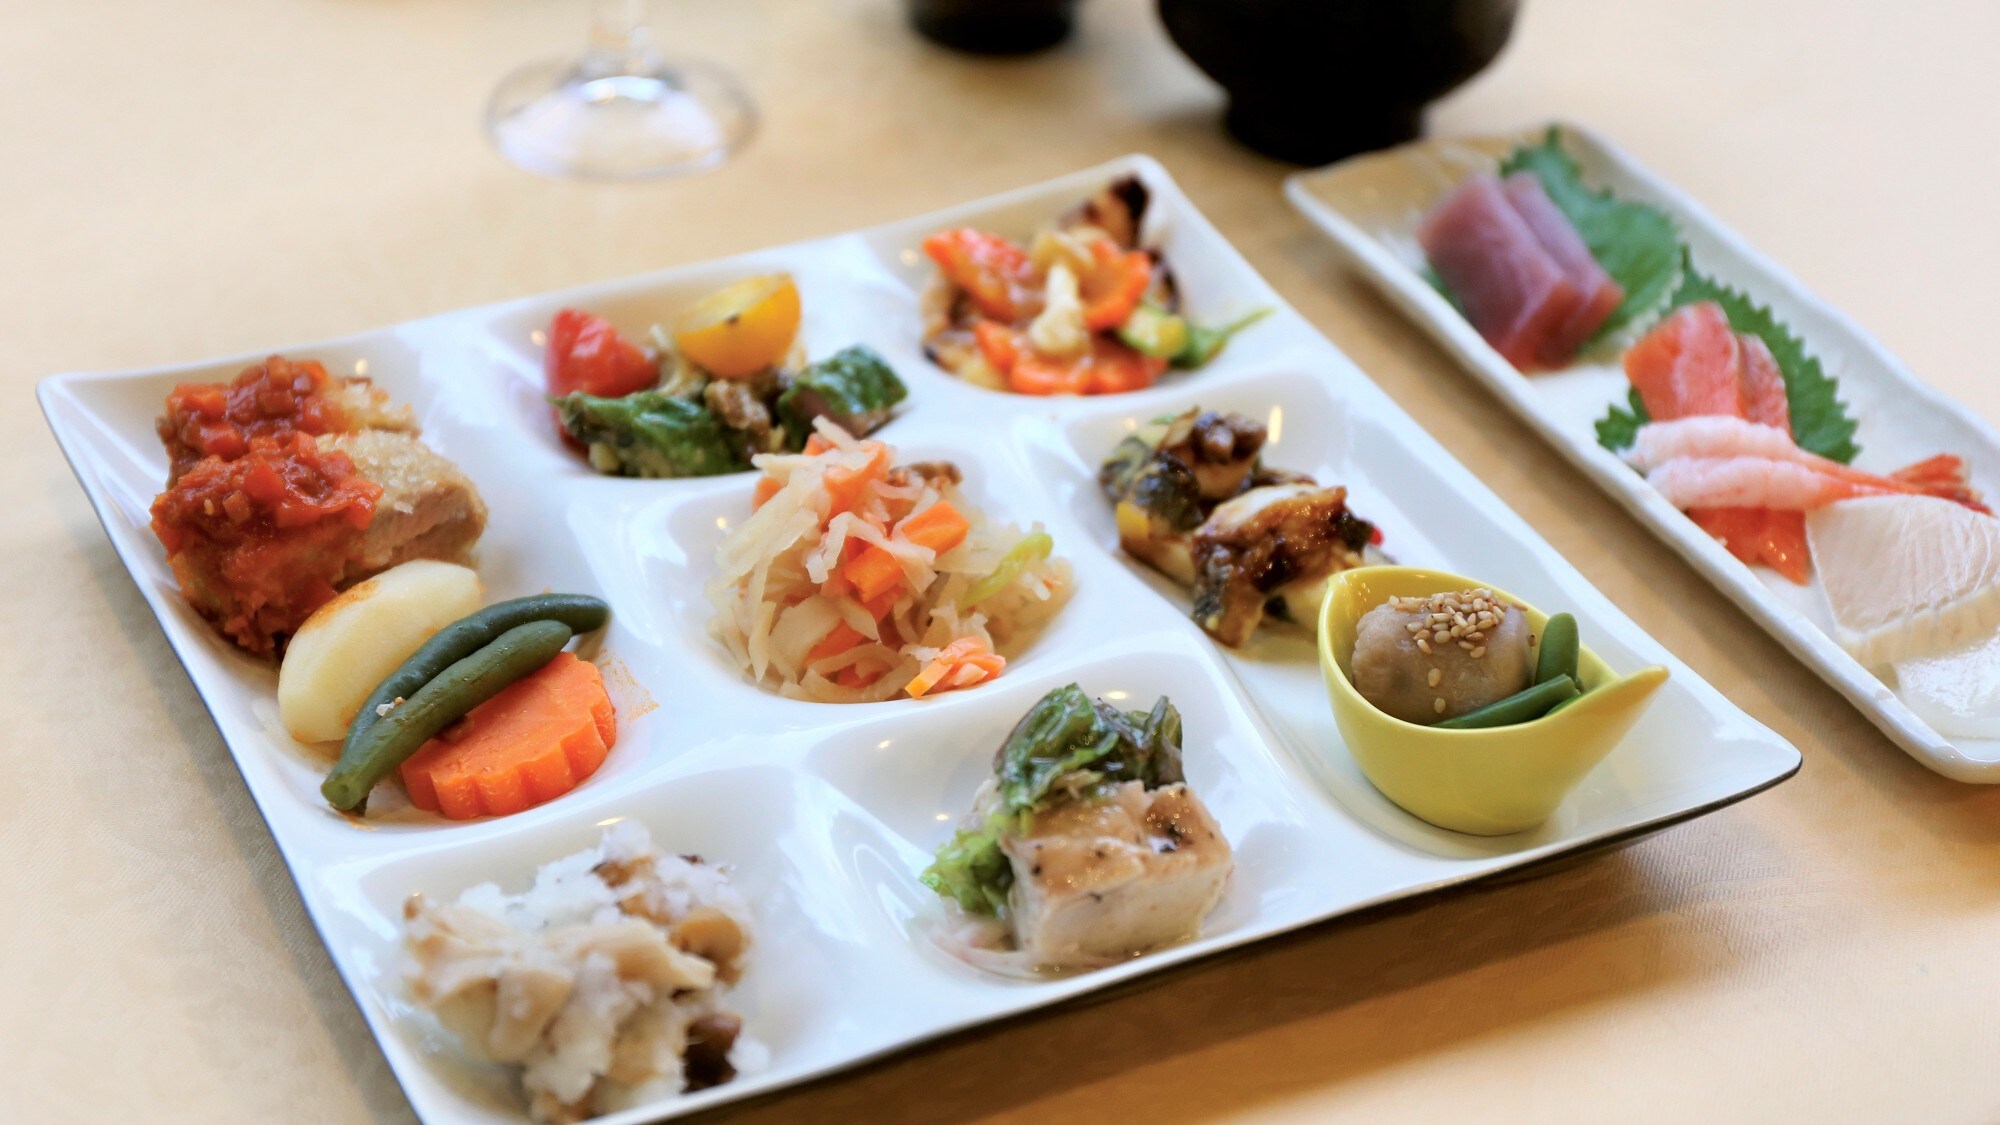 Please enjoy the buffet using seasonal ingredients from Shinshu.